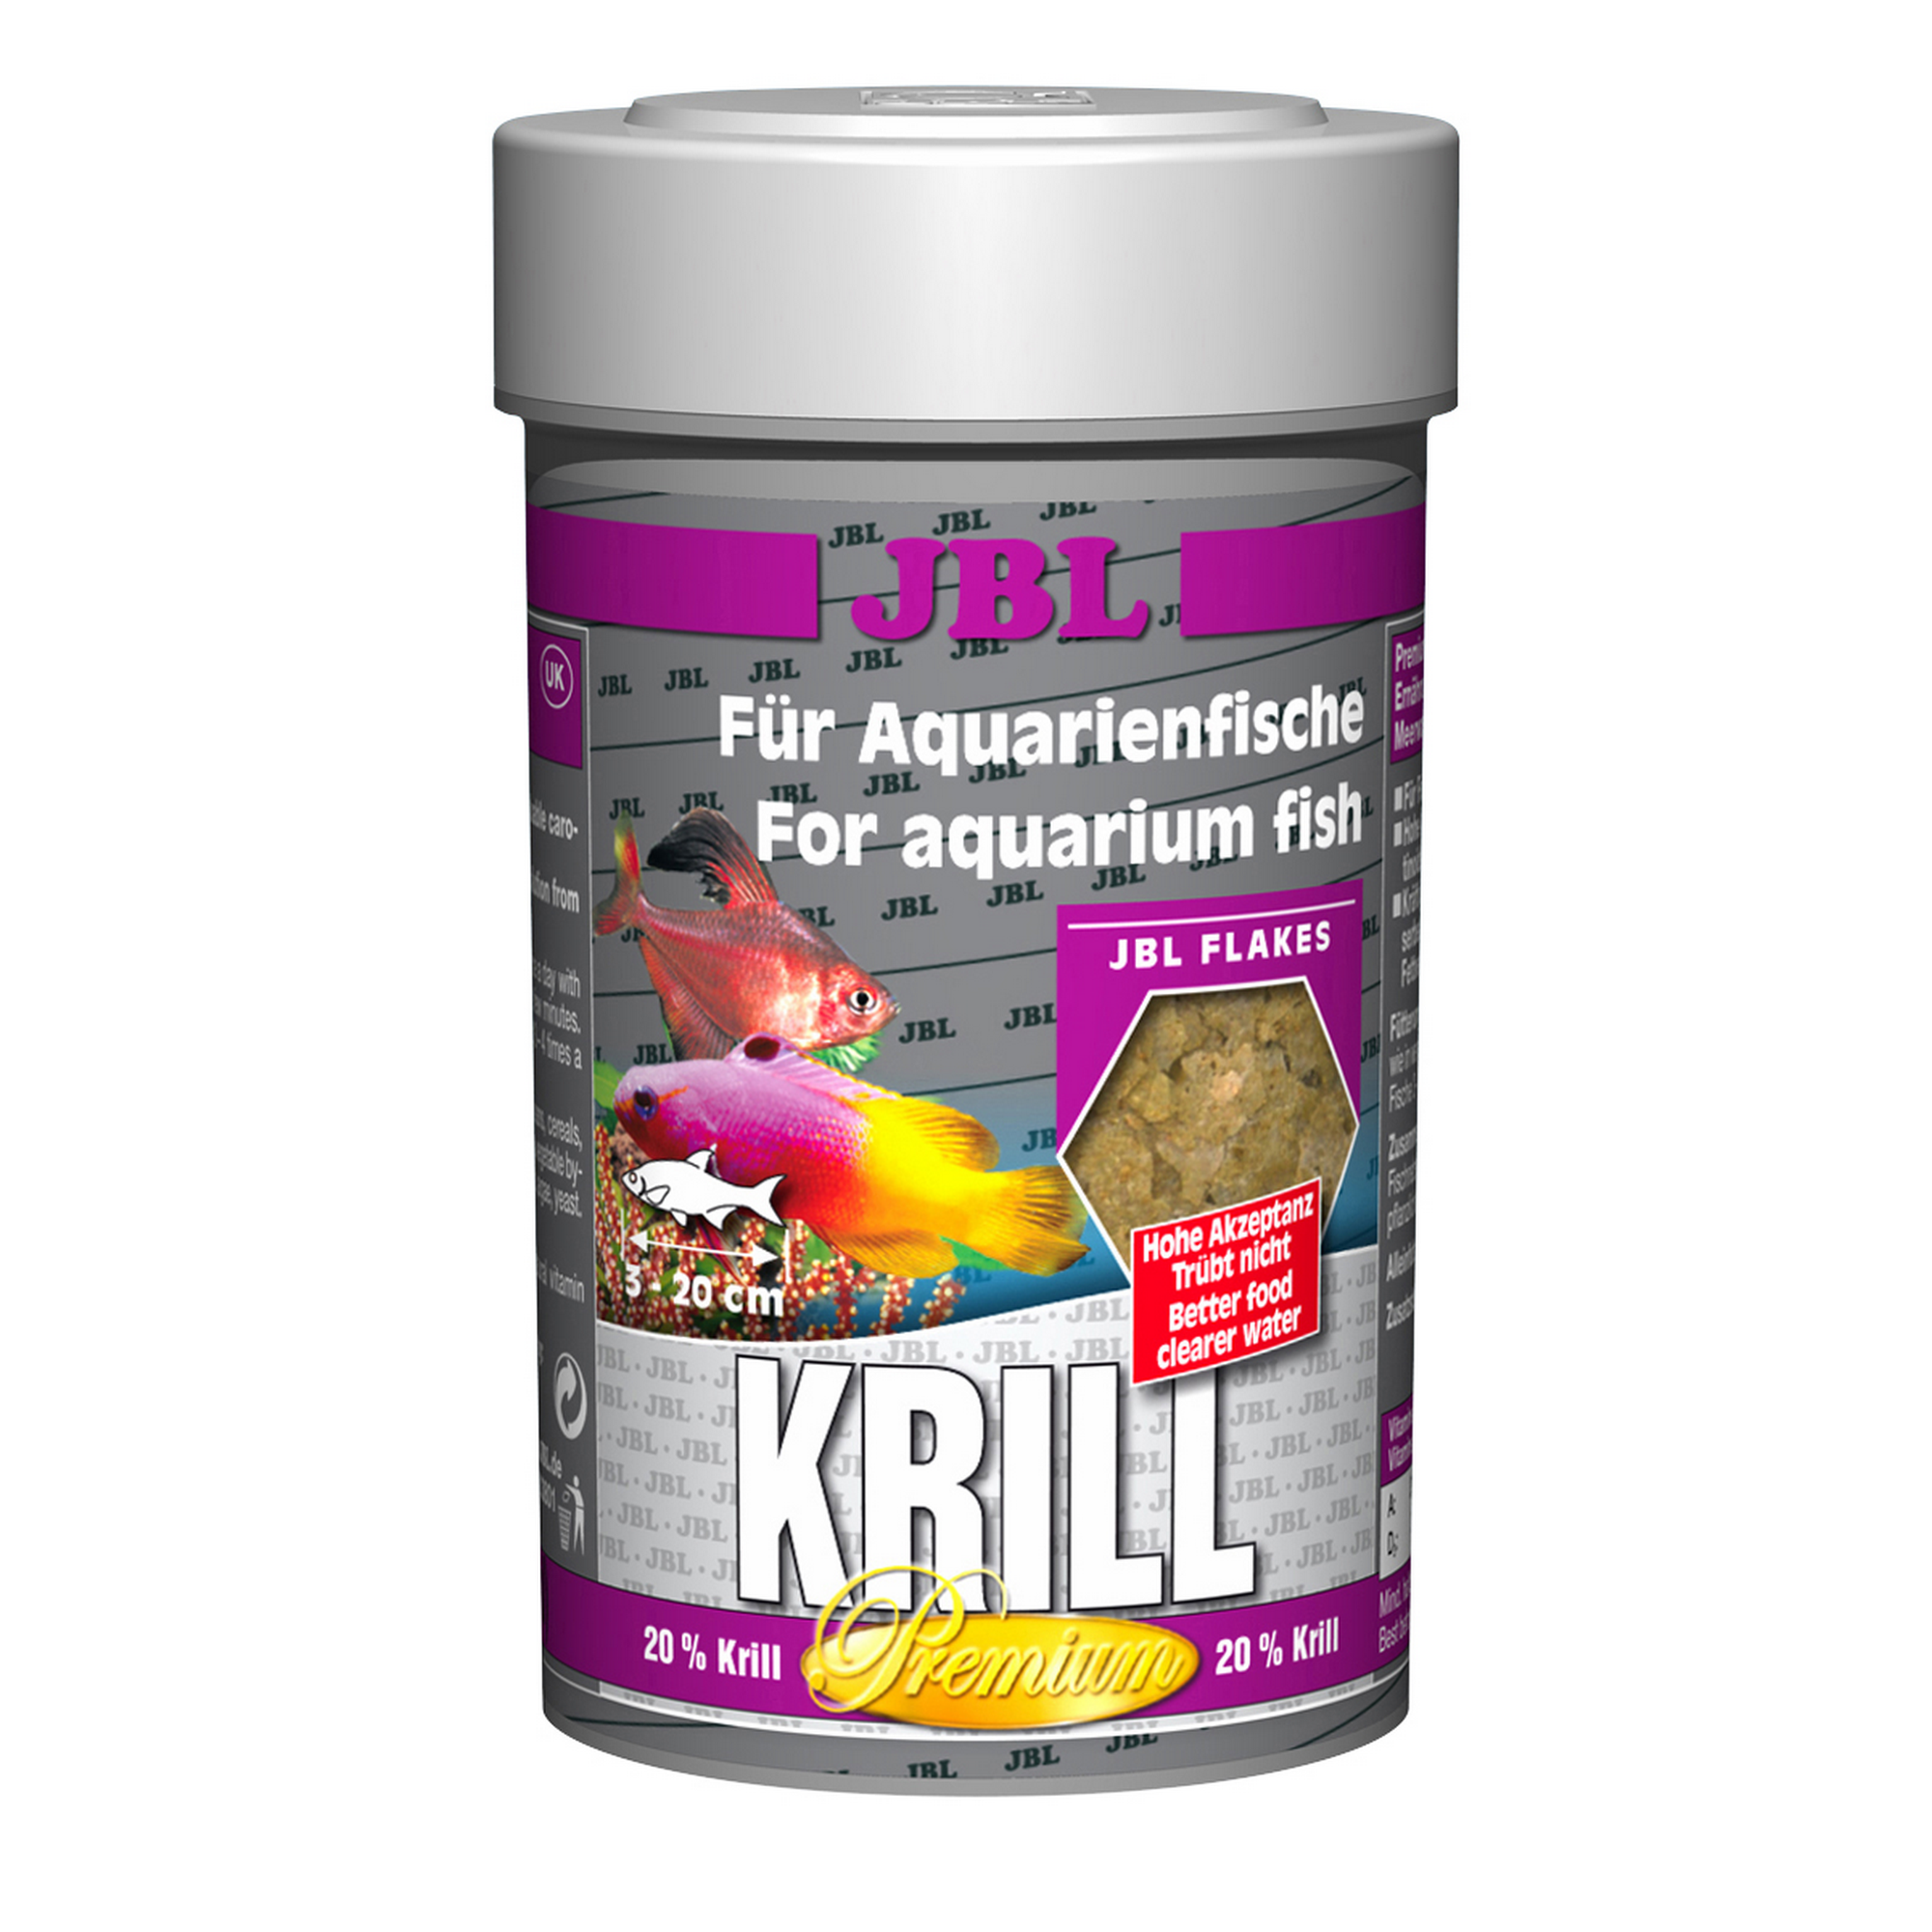 Krill Premium Für Aquarienfische 100 ml + product picture